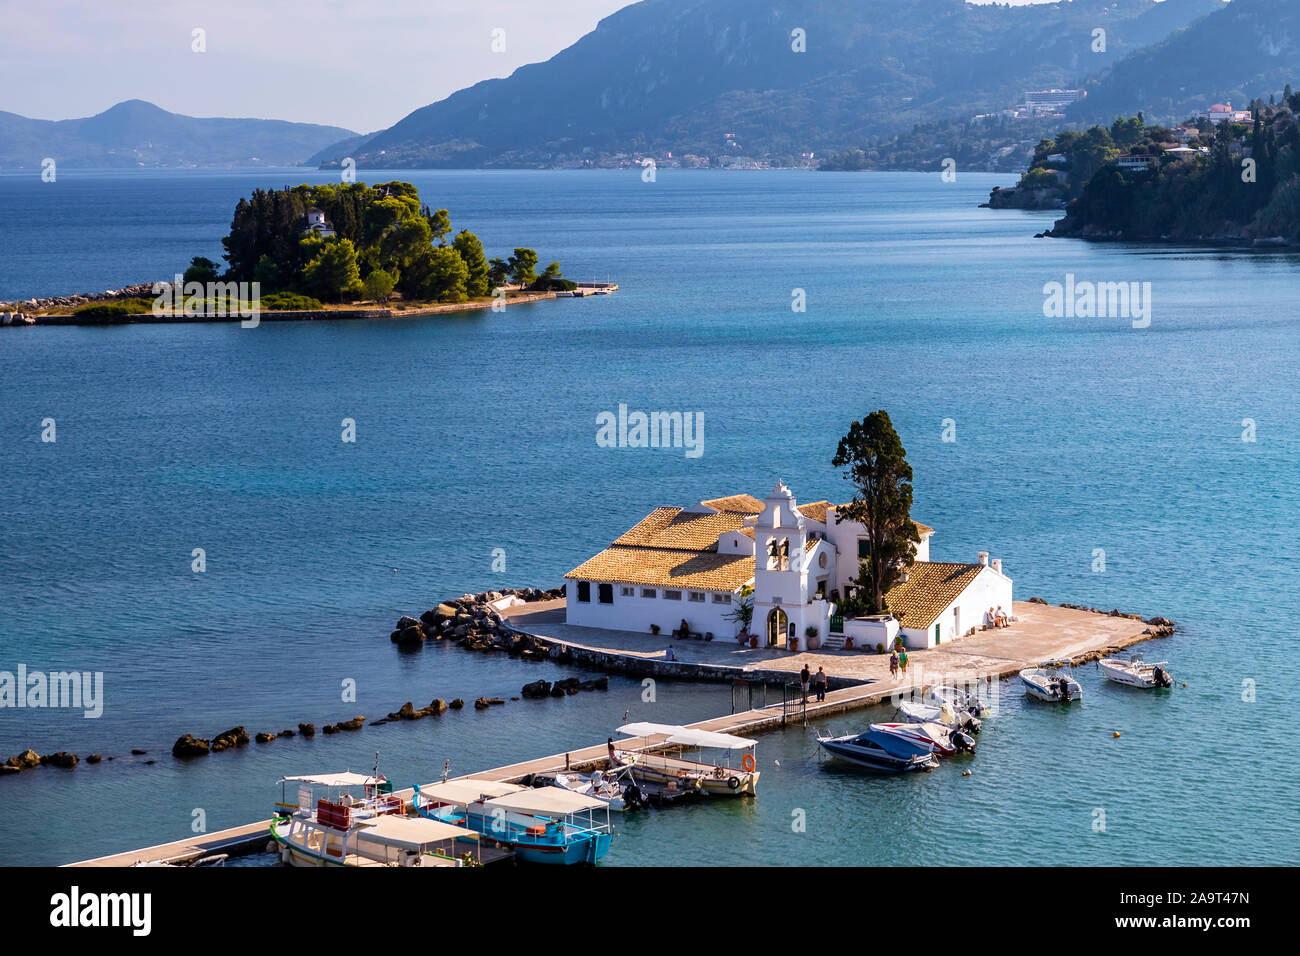 Europa, Griechenland, Kreta, Halbinsel, Vlacherna, Kloster, Stock Photo